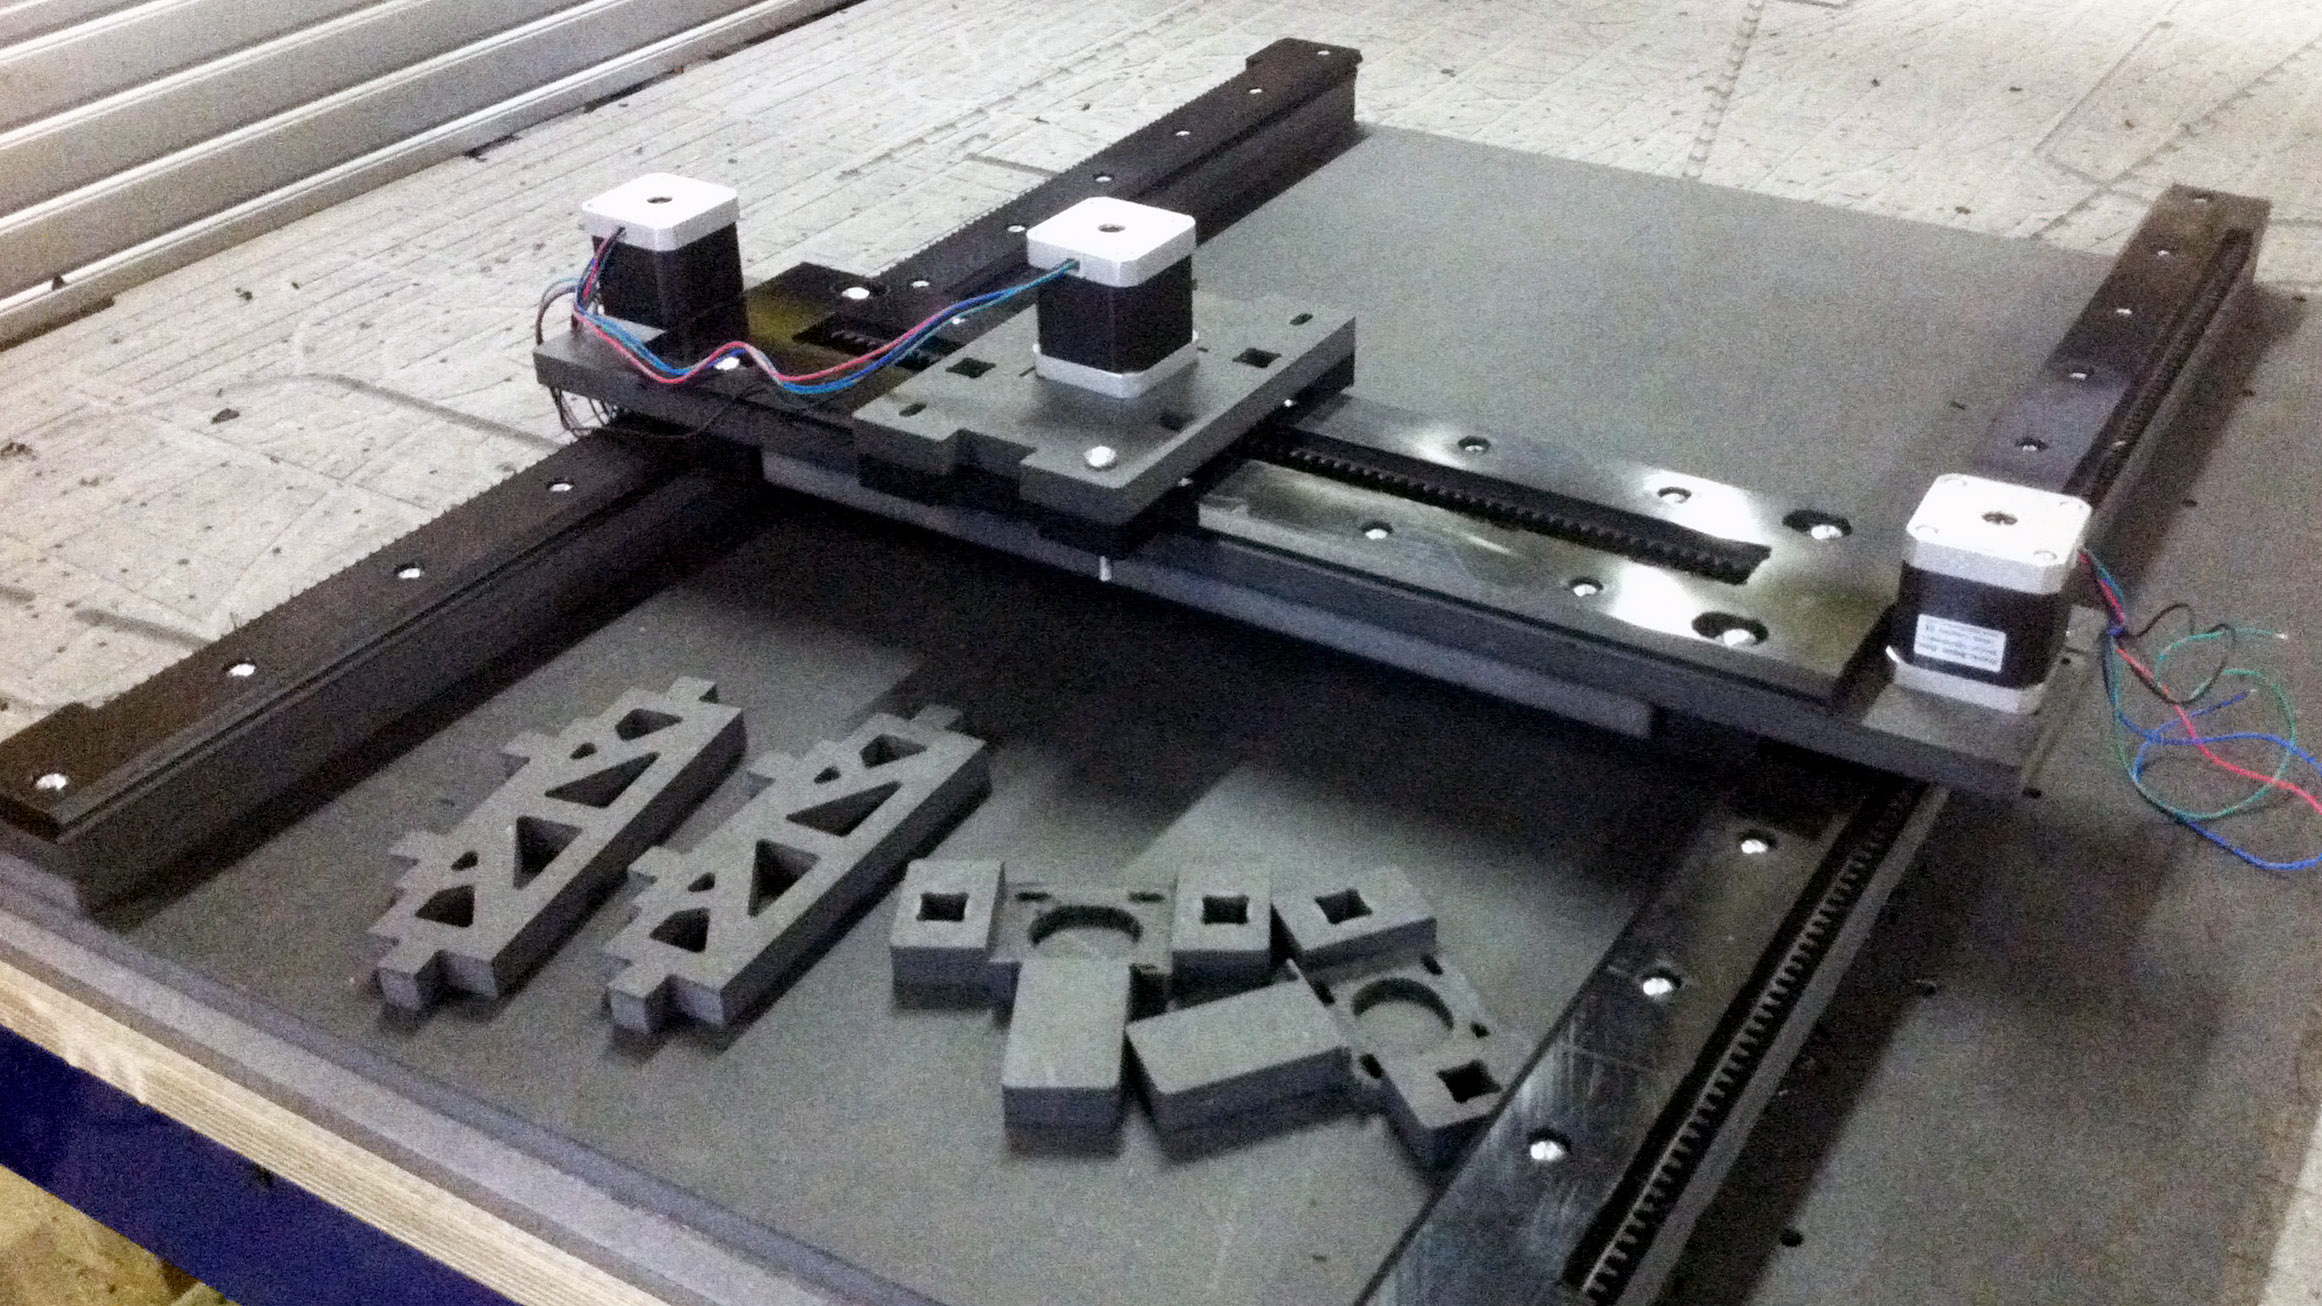 First gantry prototype fabricated on Shopbot